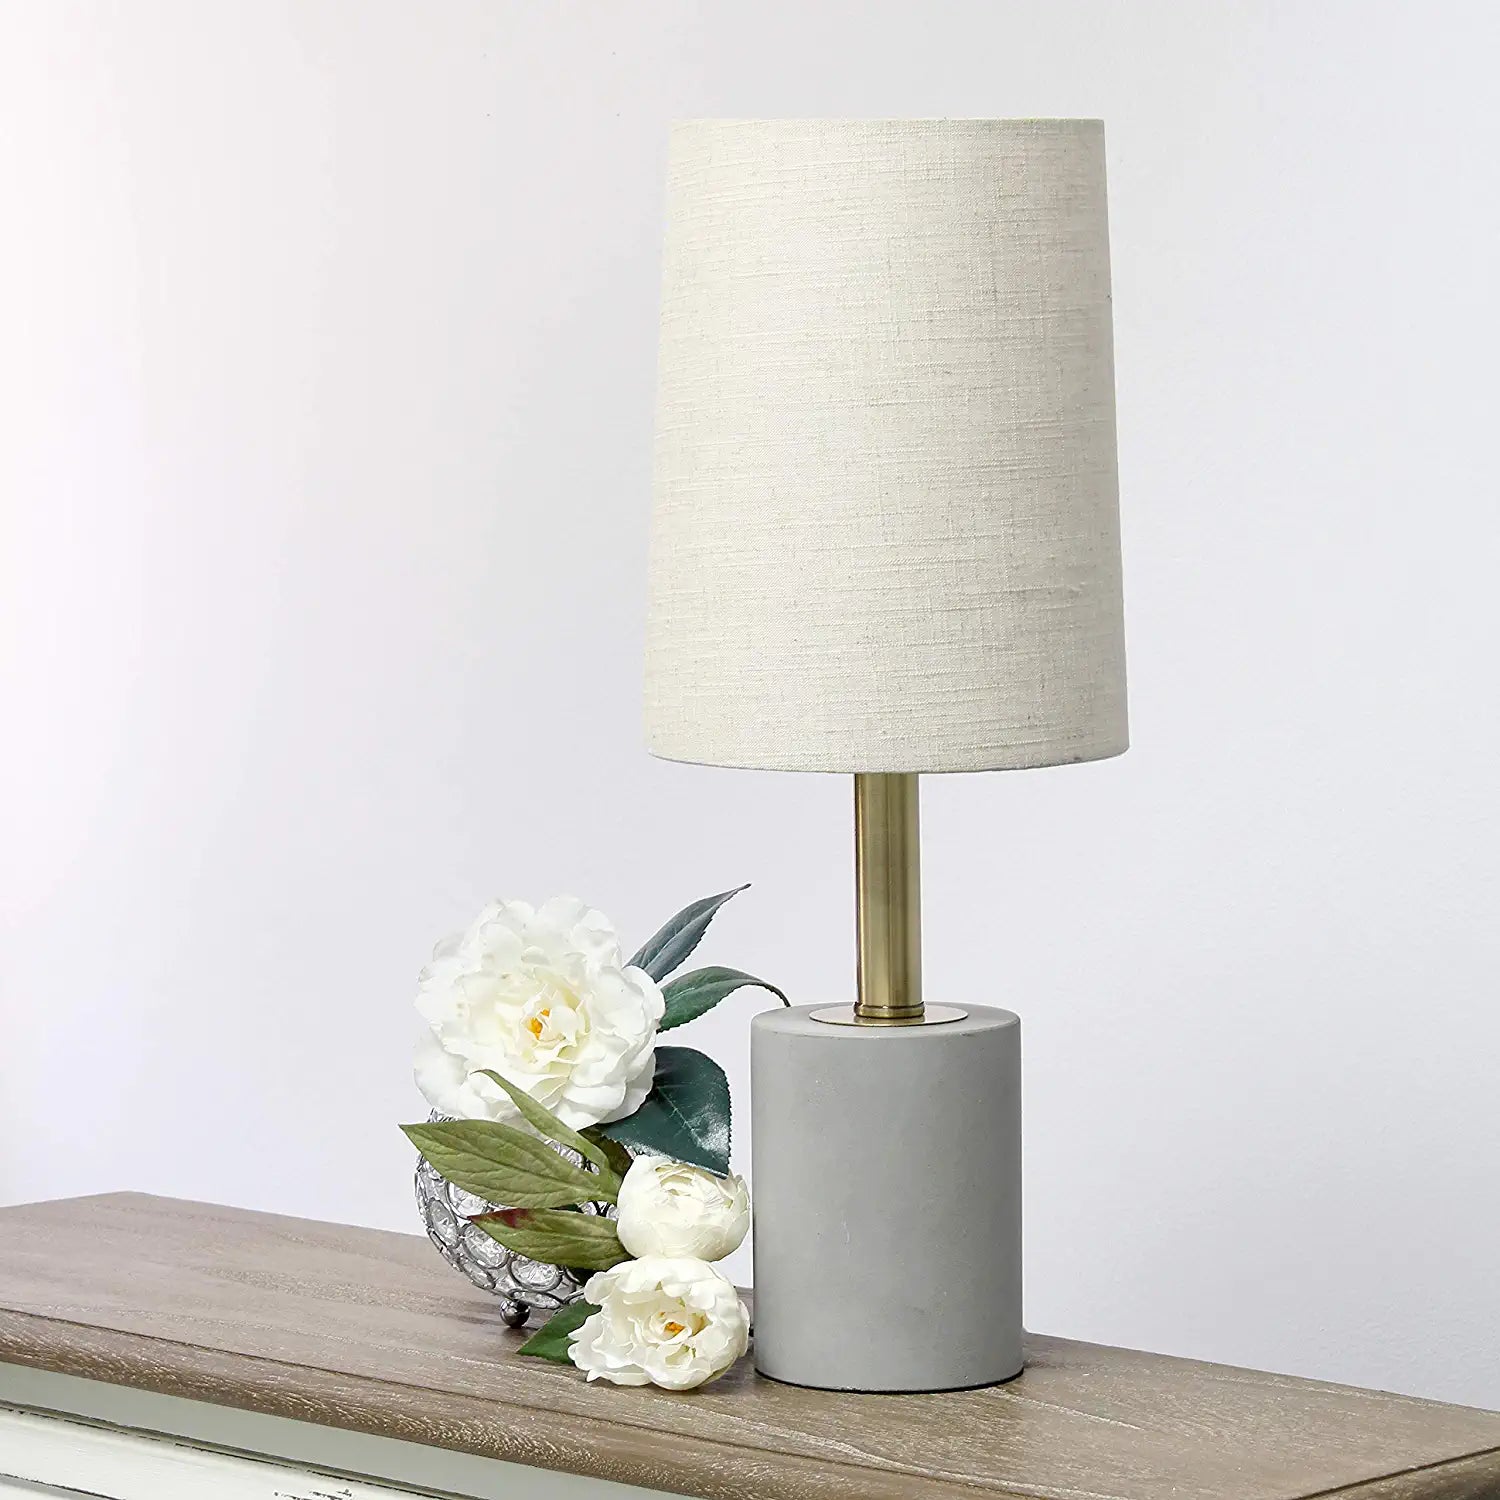 Elegant Designs LT3314-KHK Cement Antique Brass Detail Table Lamp, Khaki